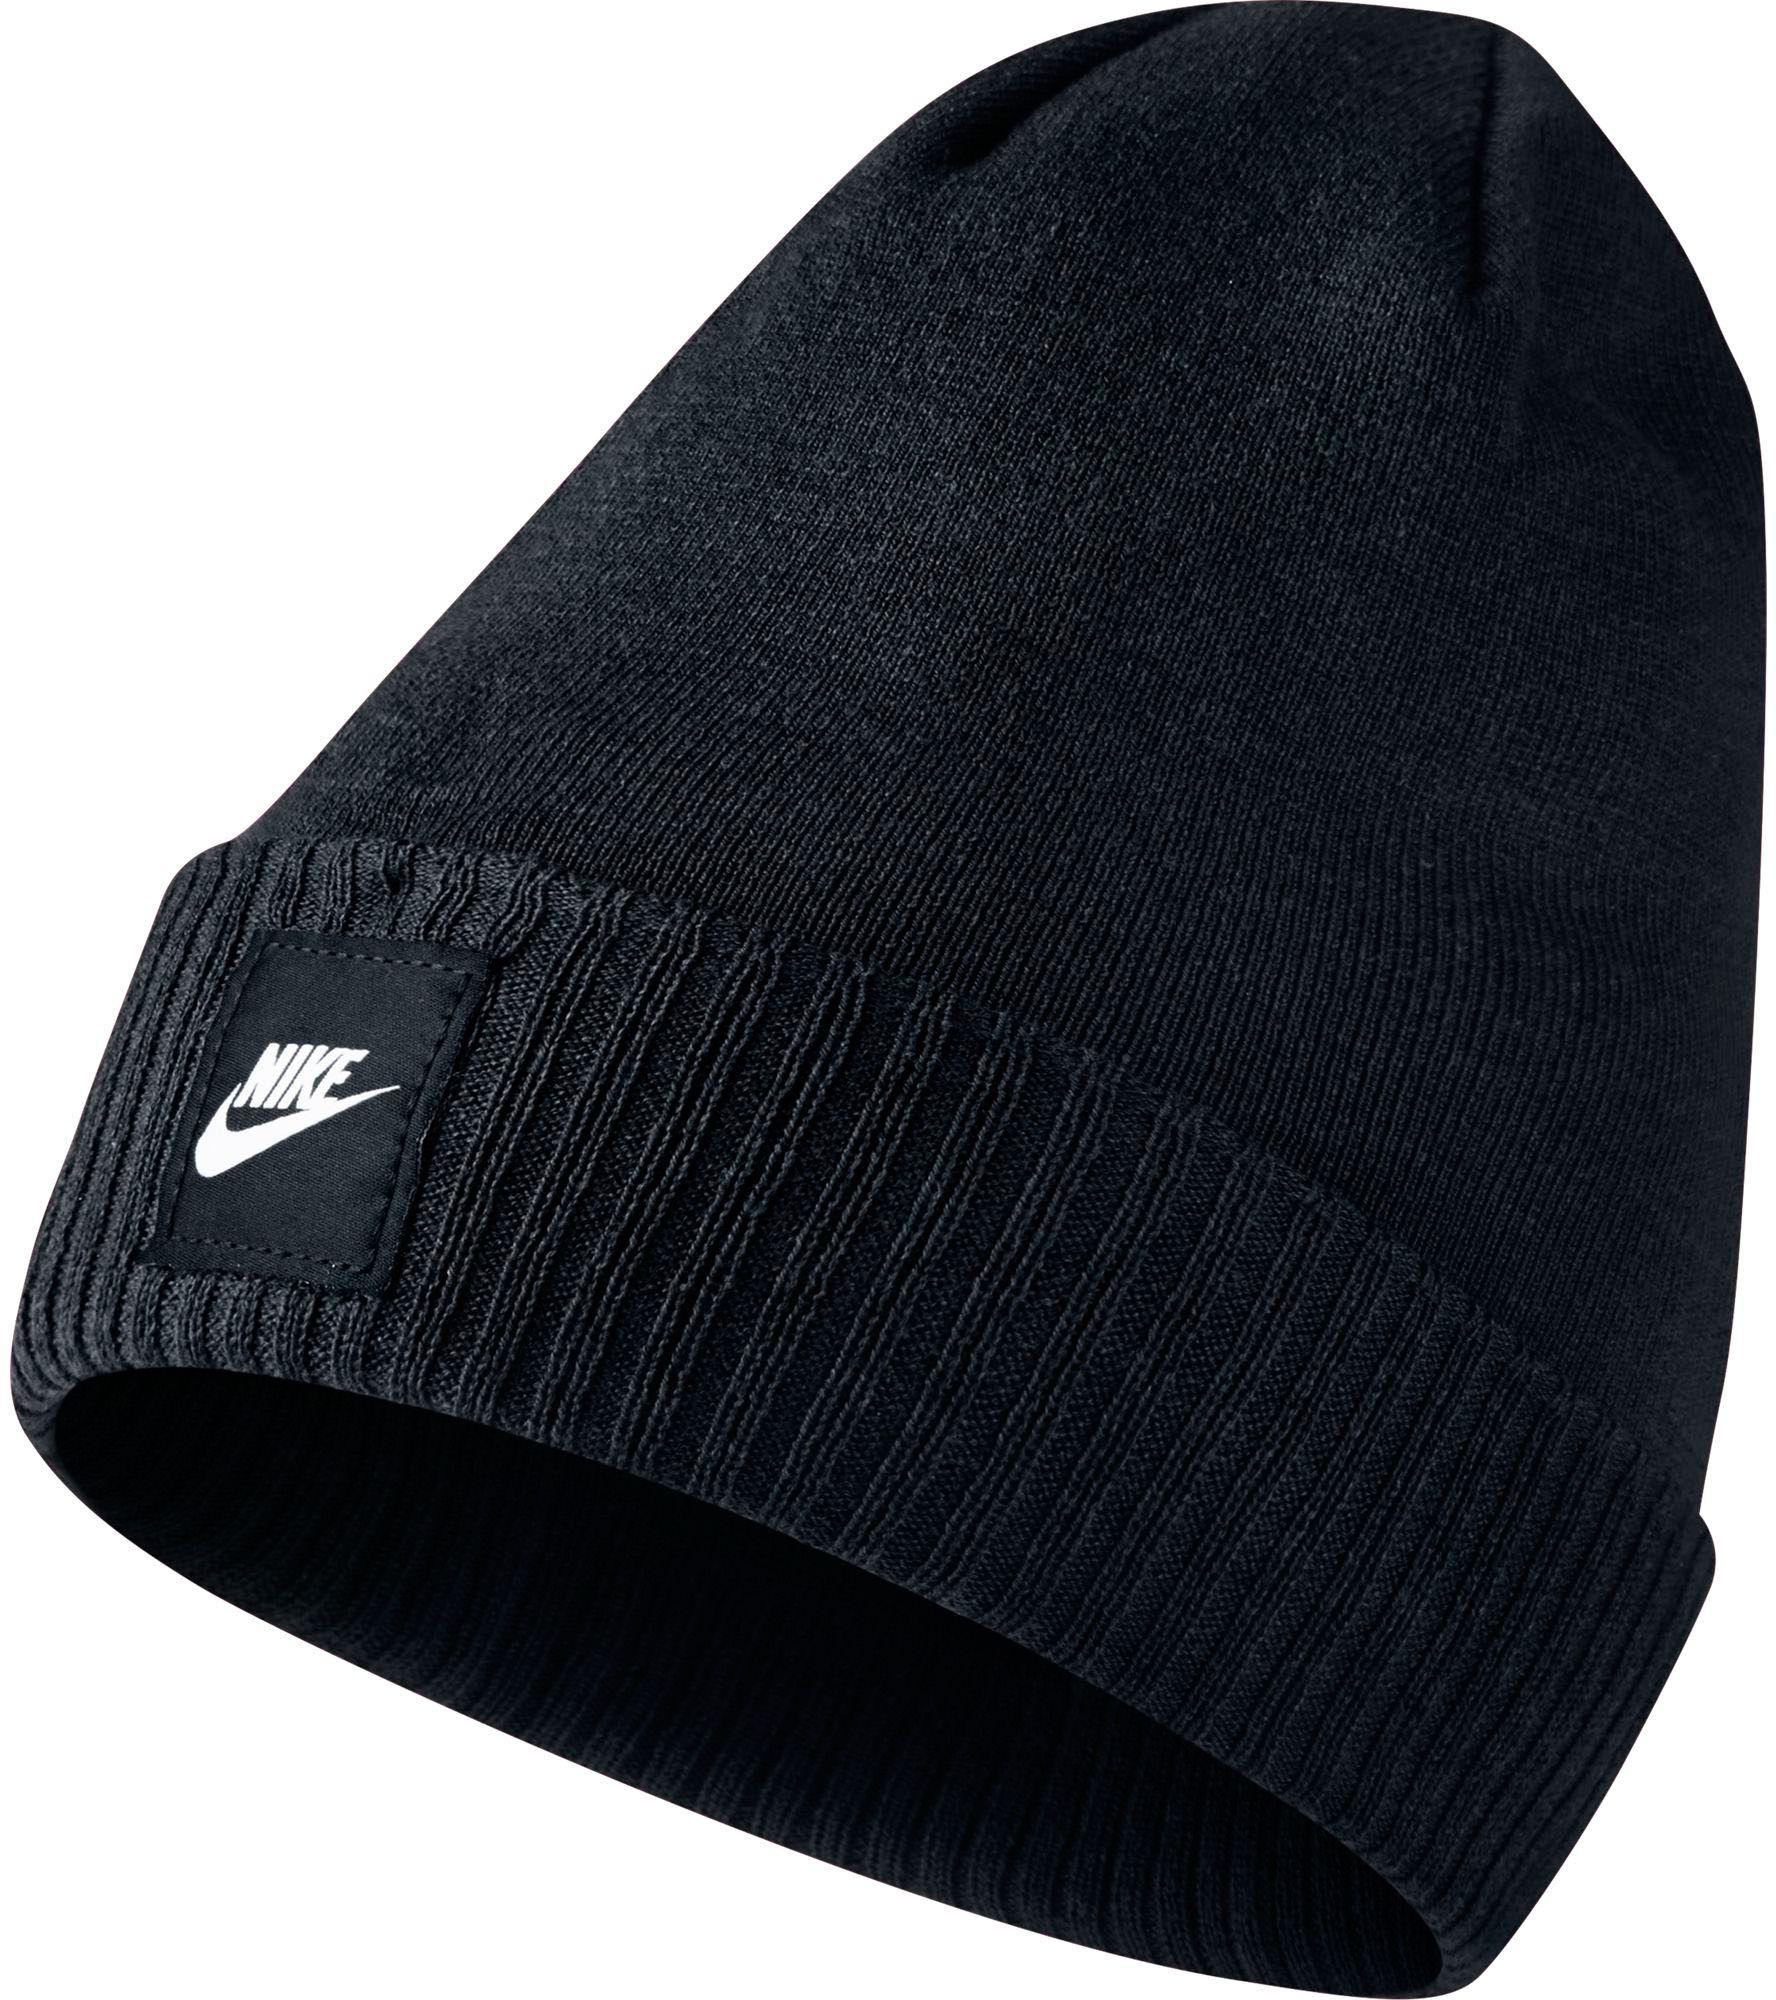 Nike Synthetic Futura Knit Beanie in Black/Black (Black) for Men - Lyst